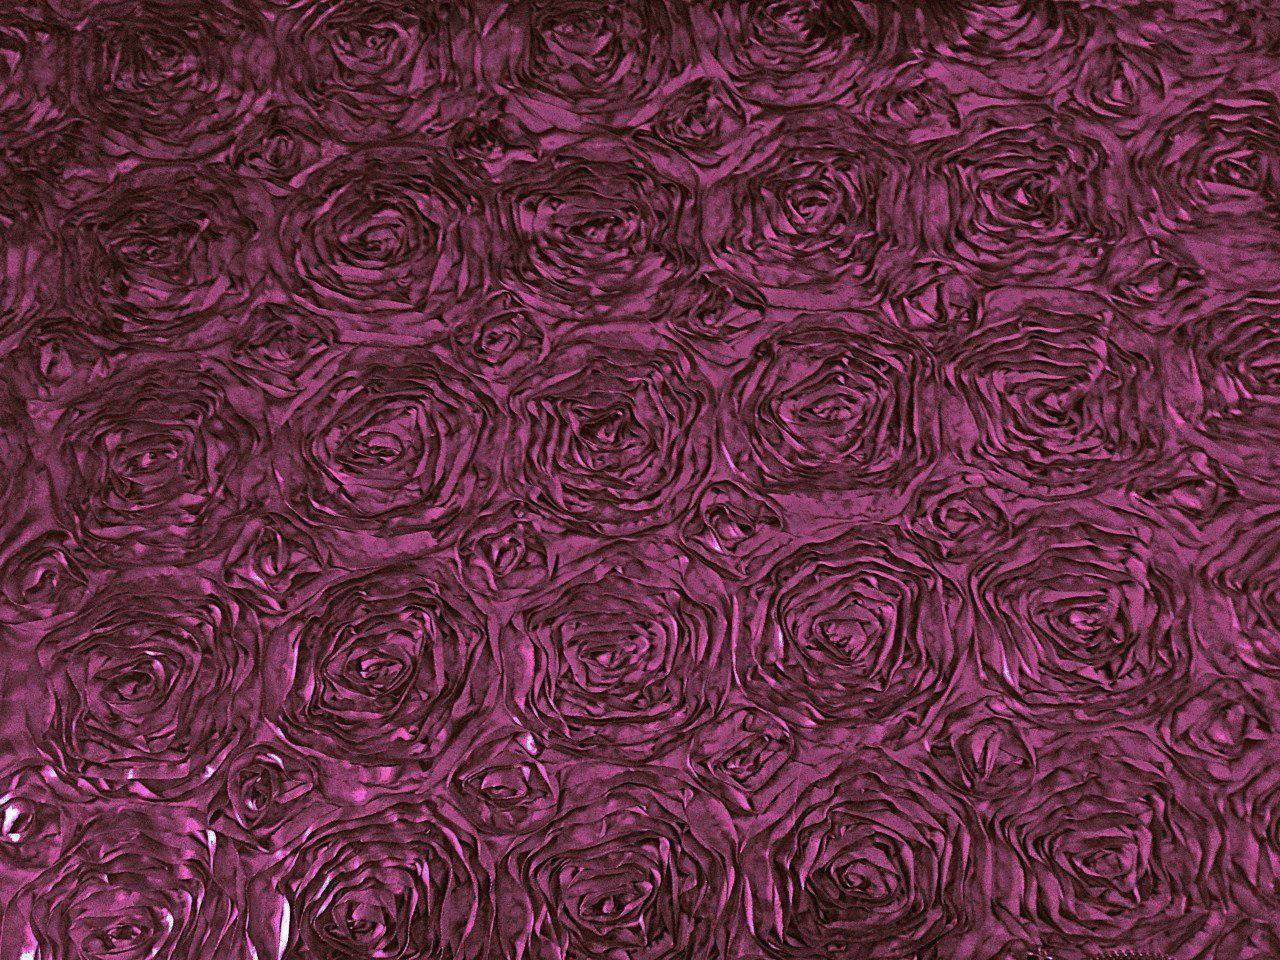 Burgundy Rose Fabric Backdrop - Beautiful Photo Props